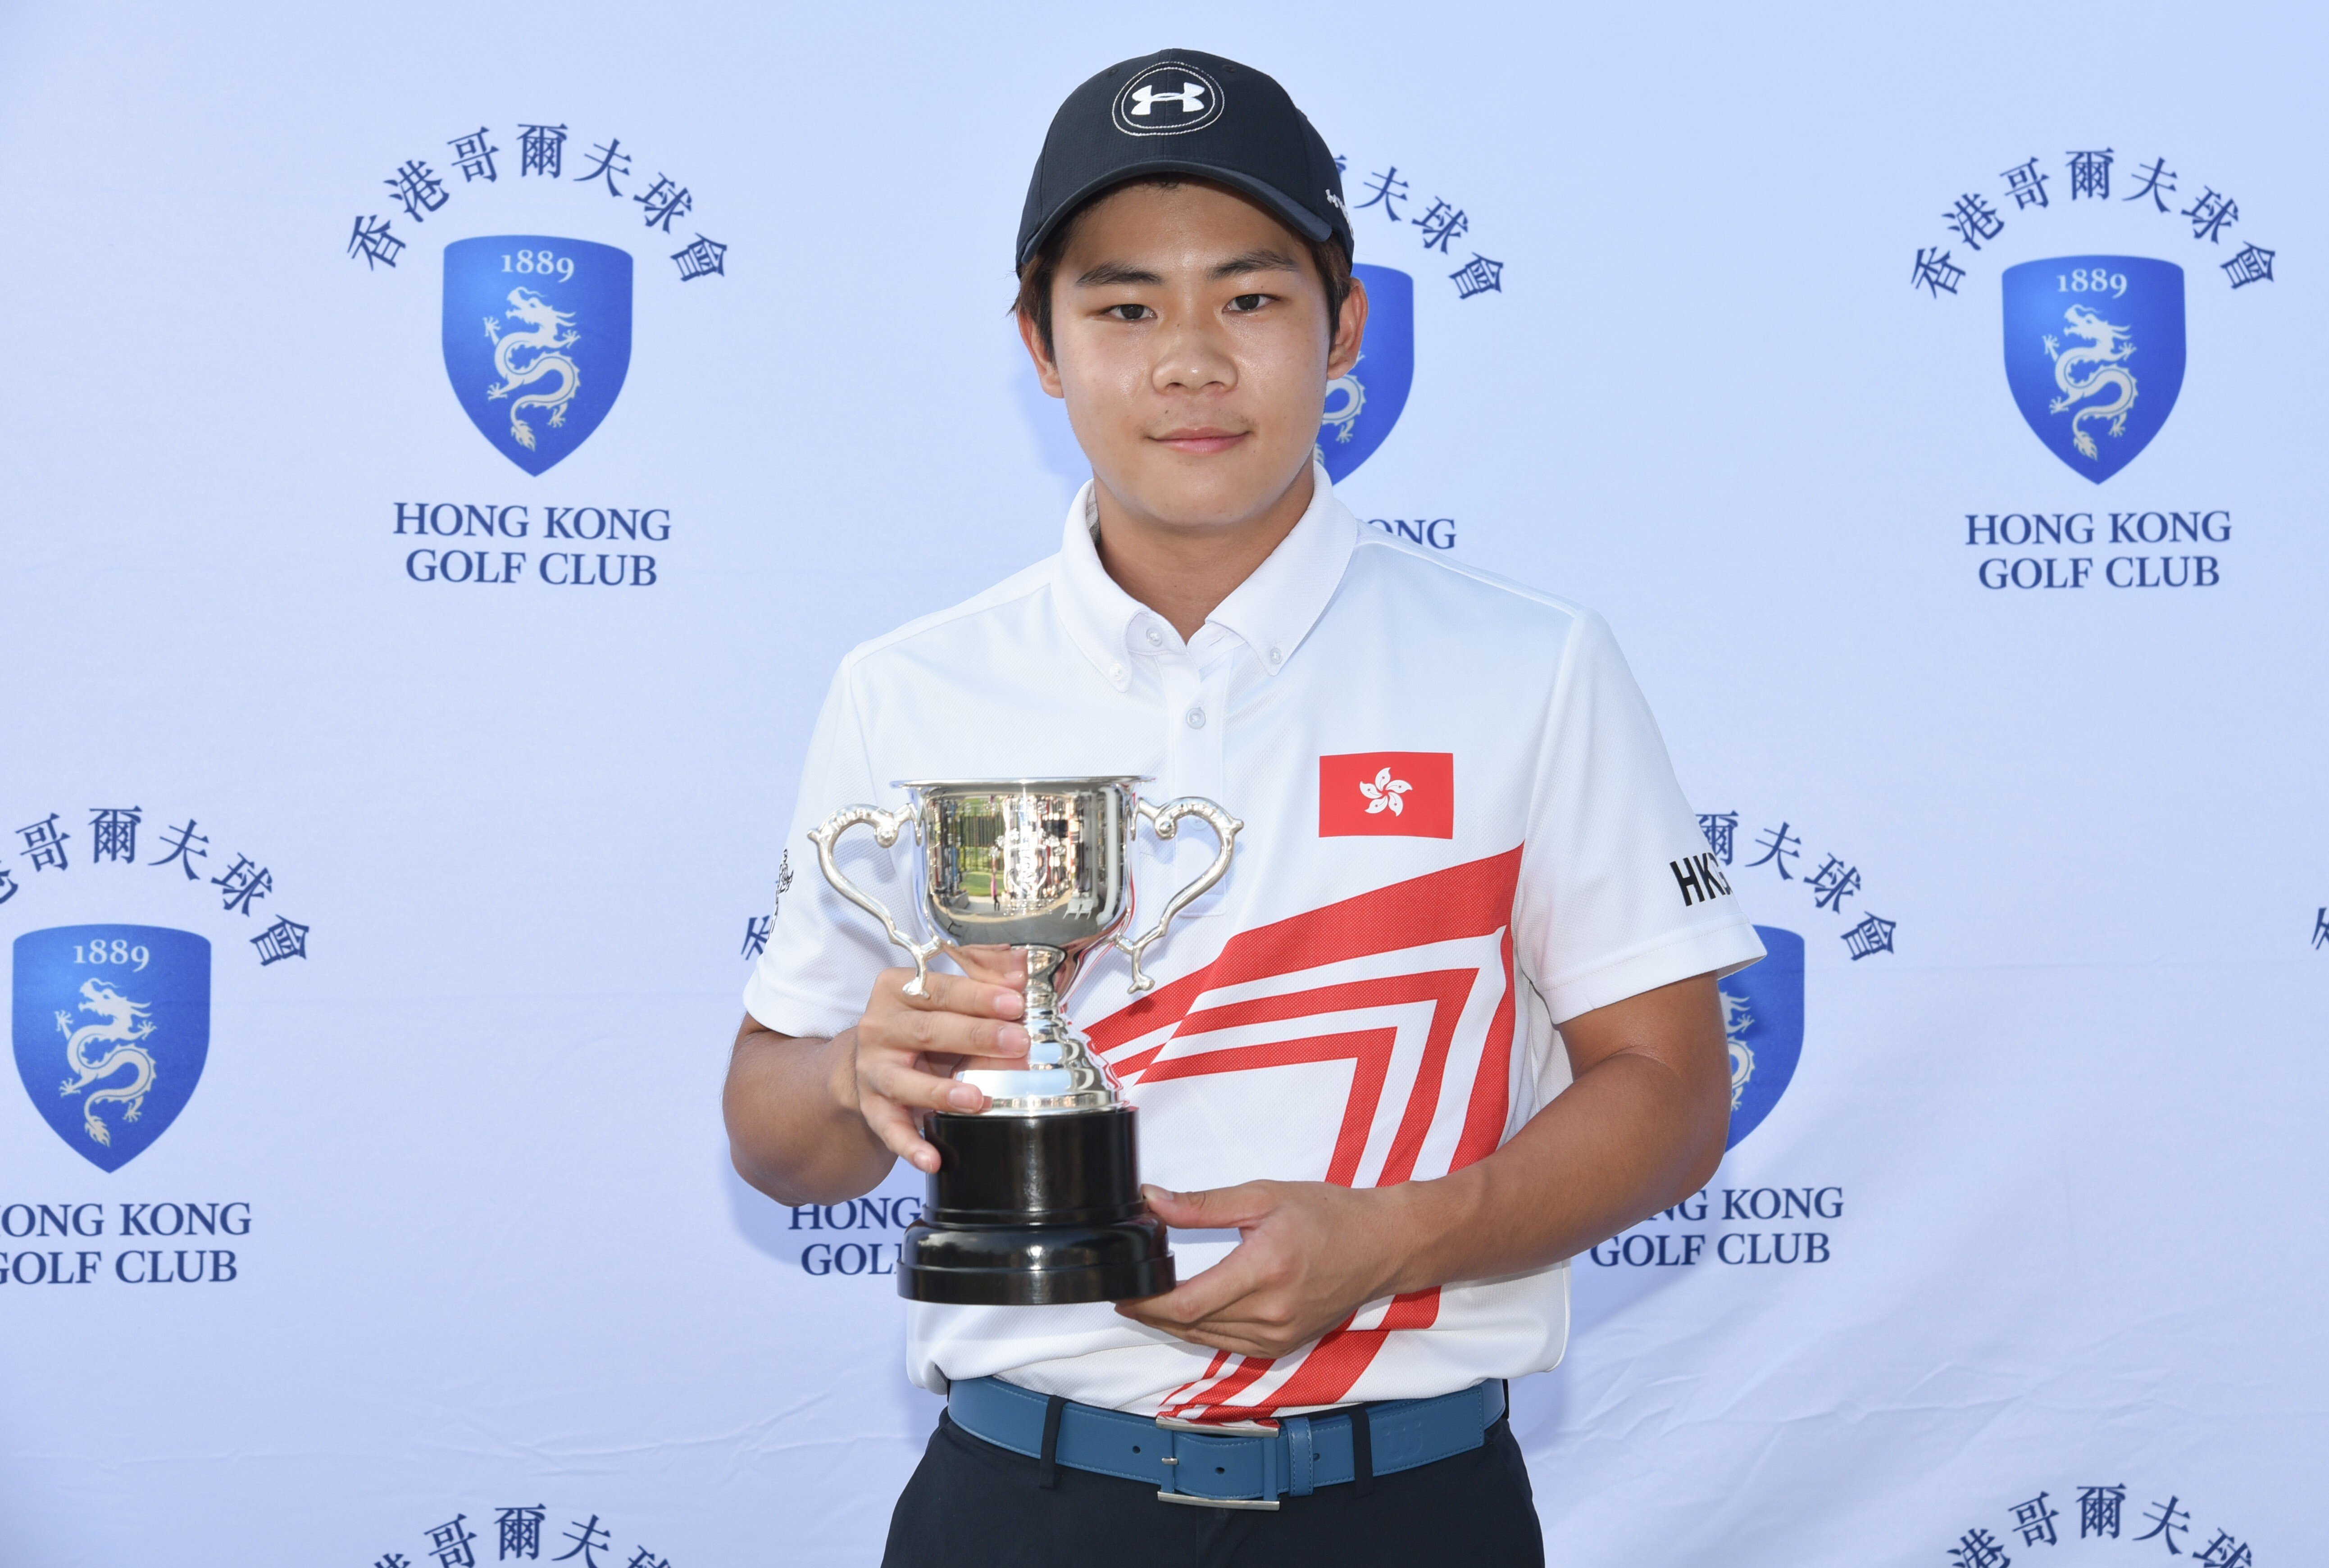 Amateur Isaac Lam after winning the inaugural Fanling Trophy at Hong Kong Golf Club on Thursday. Photo: HKGC